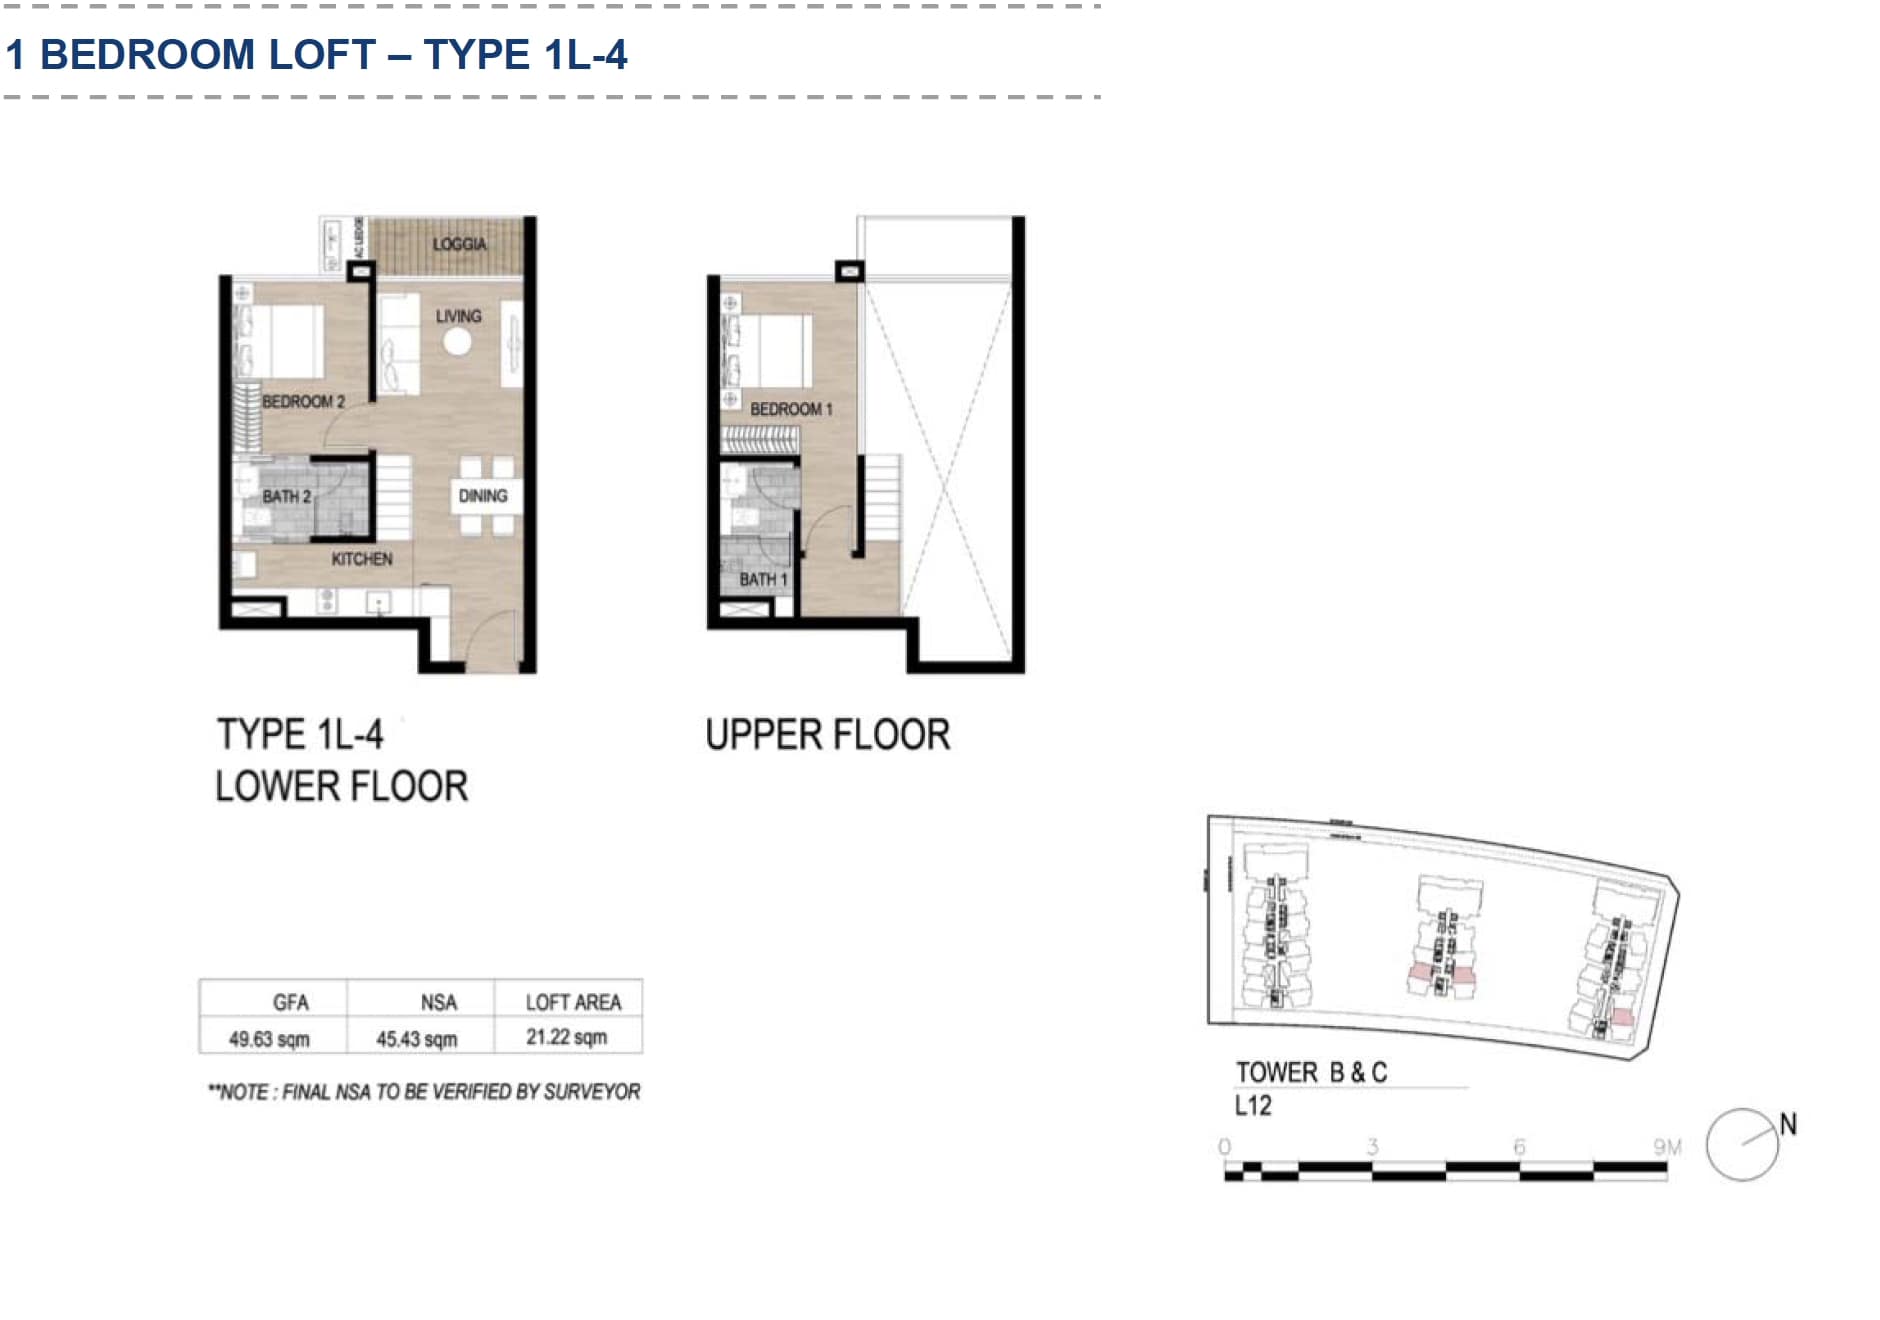 Floor plan of loft Metrople apartment 4